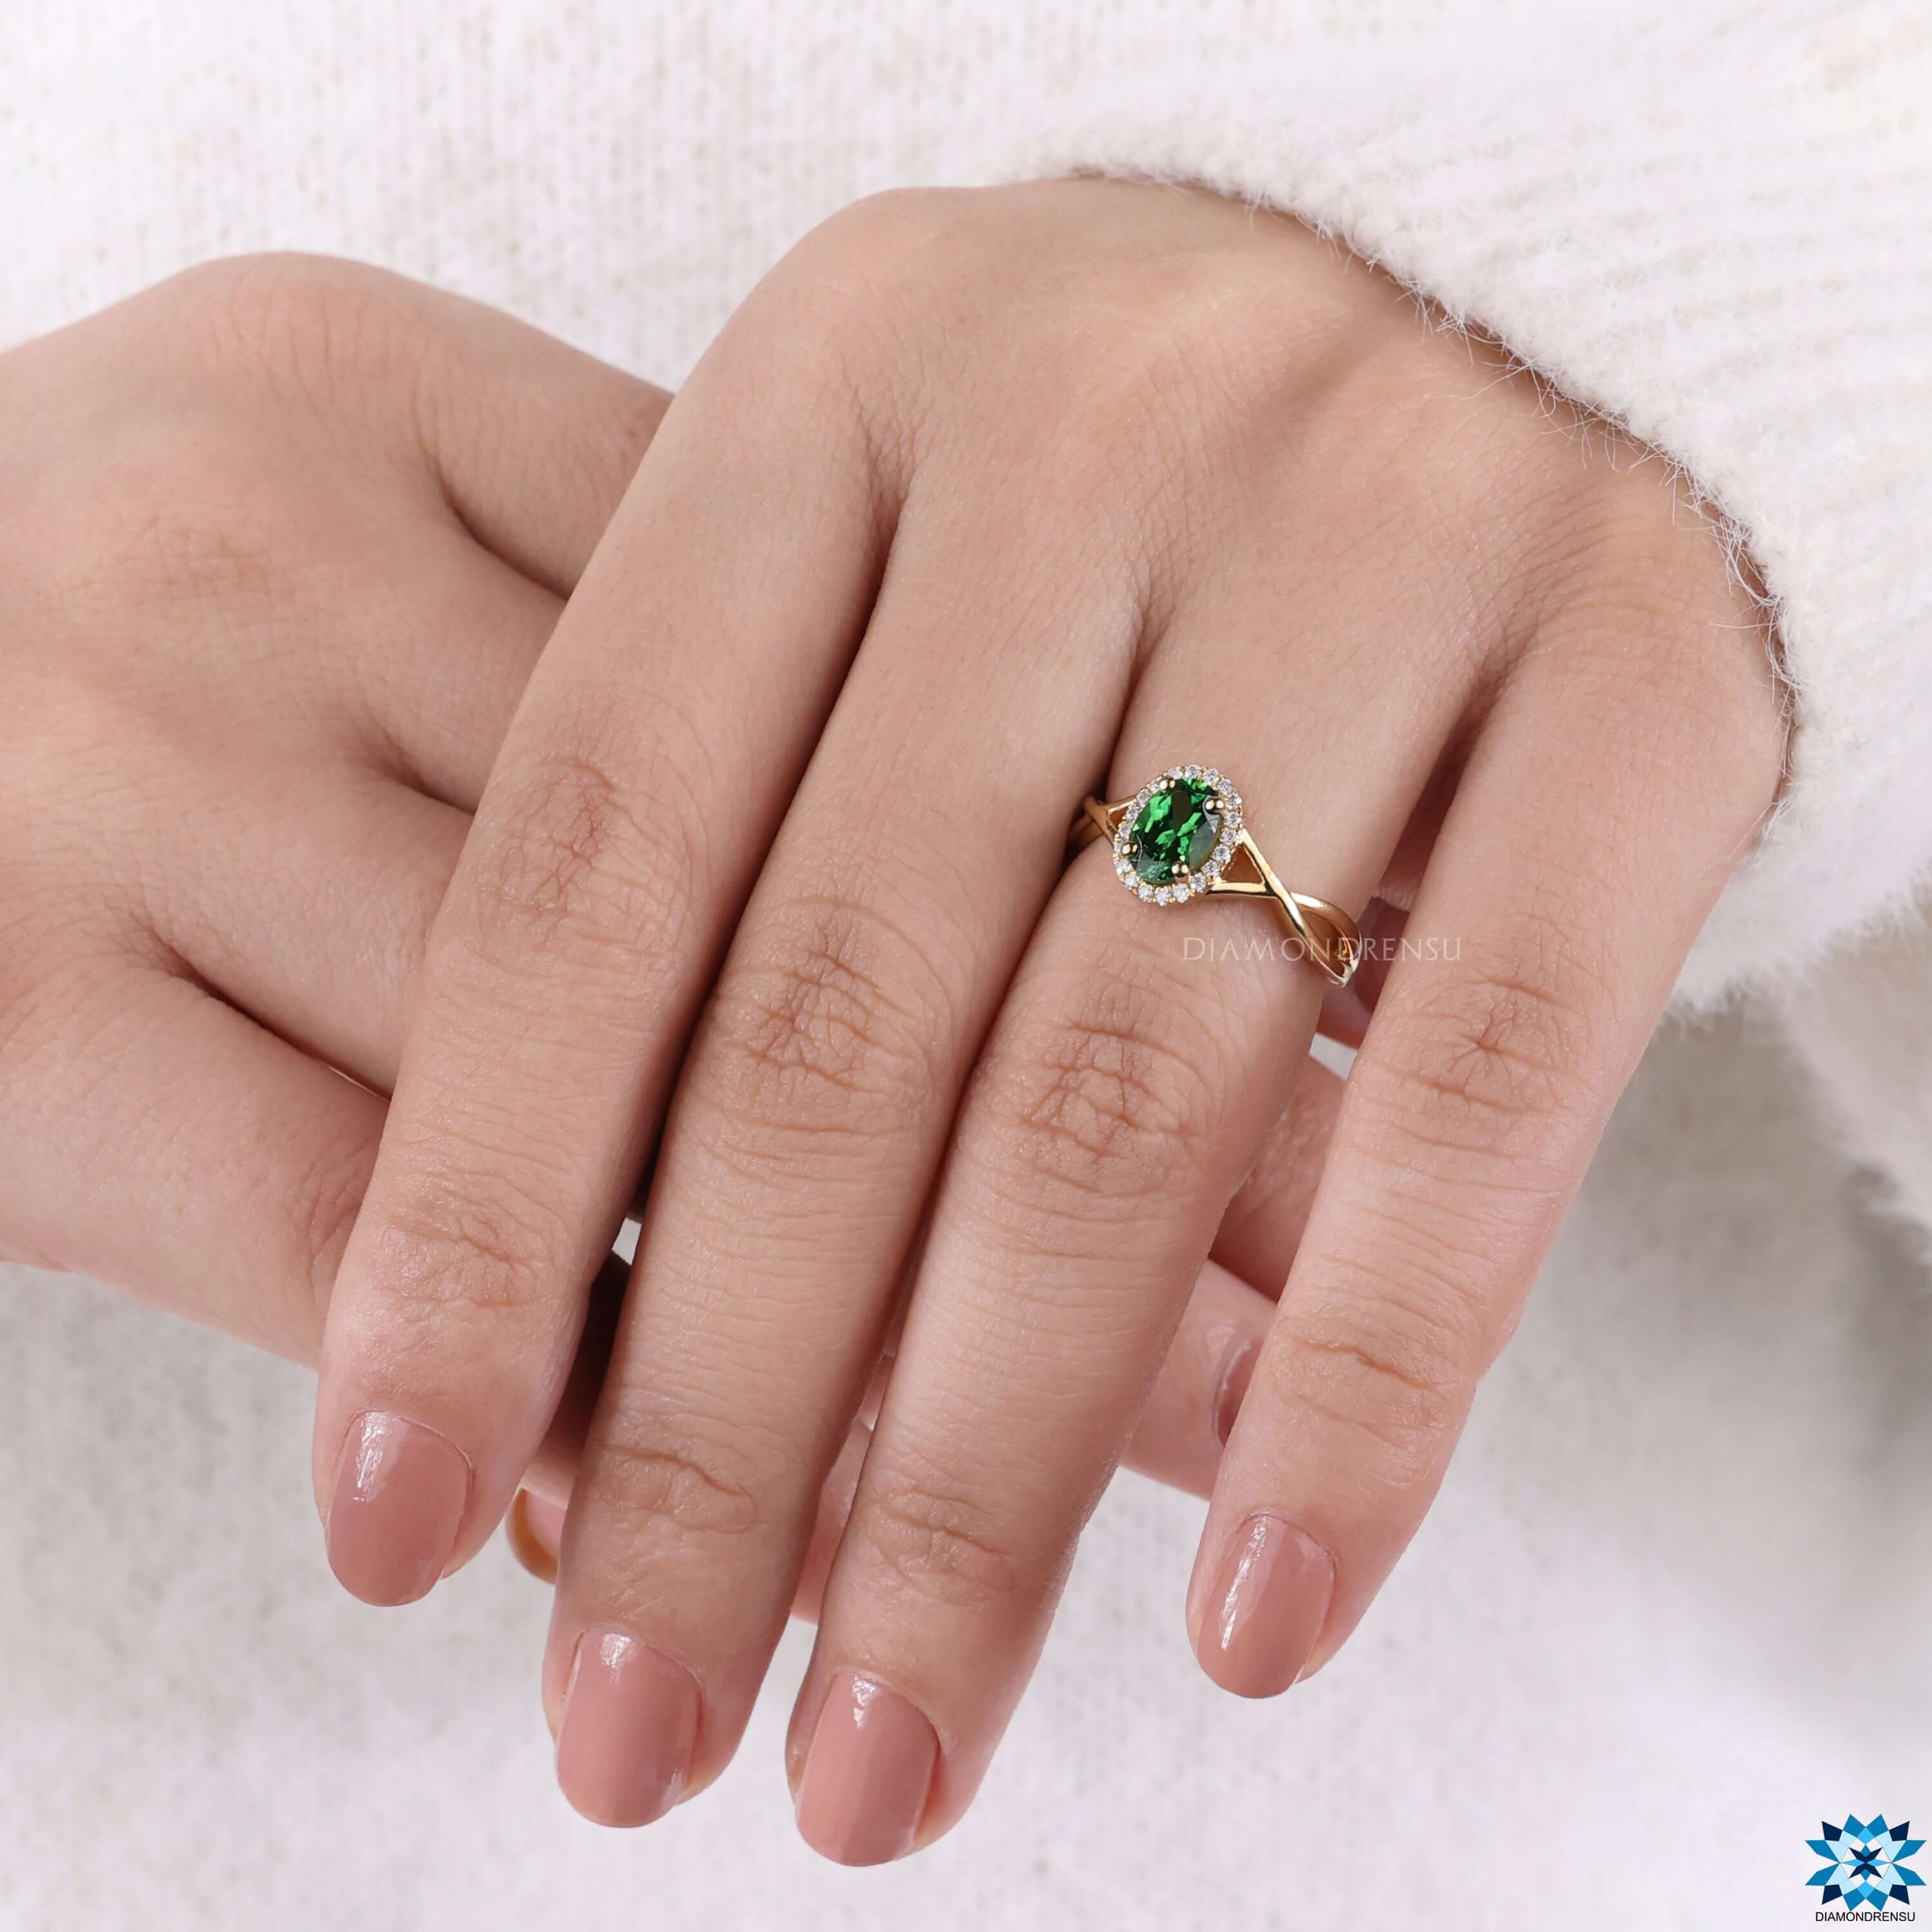 oval engagement ring - diamondrensu